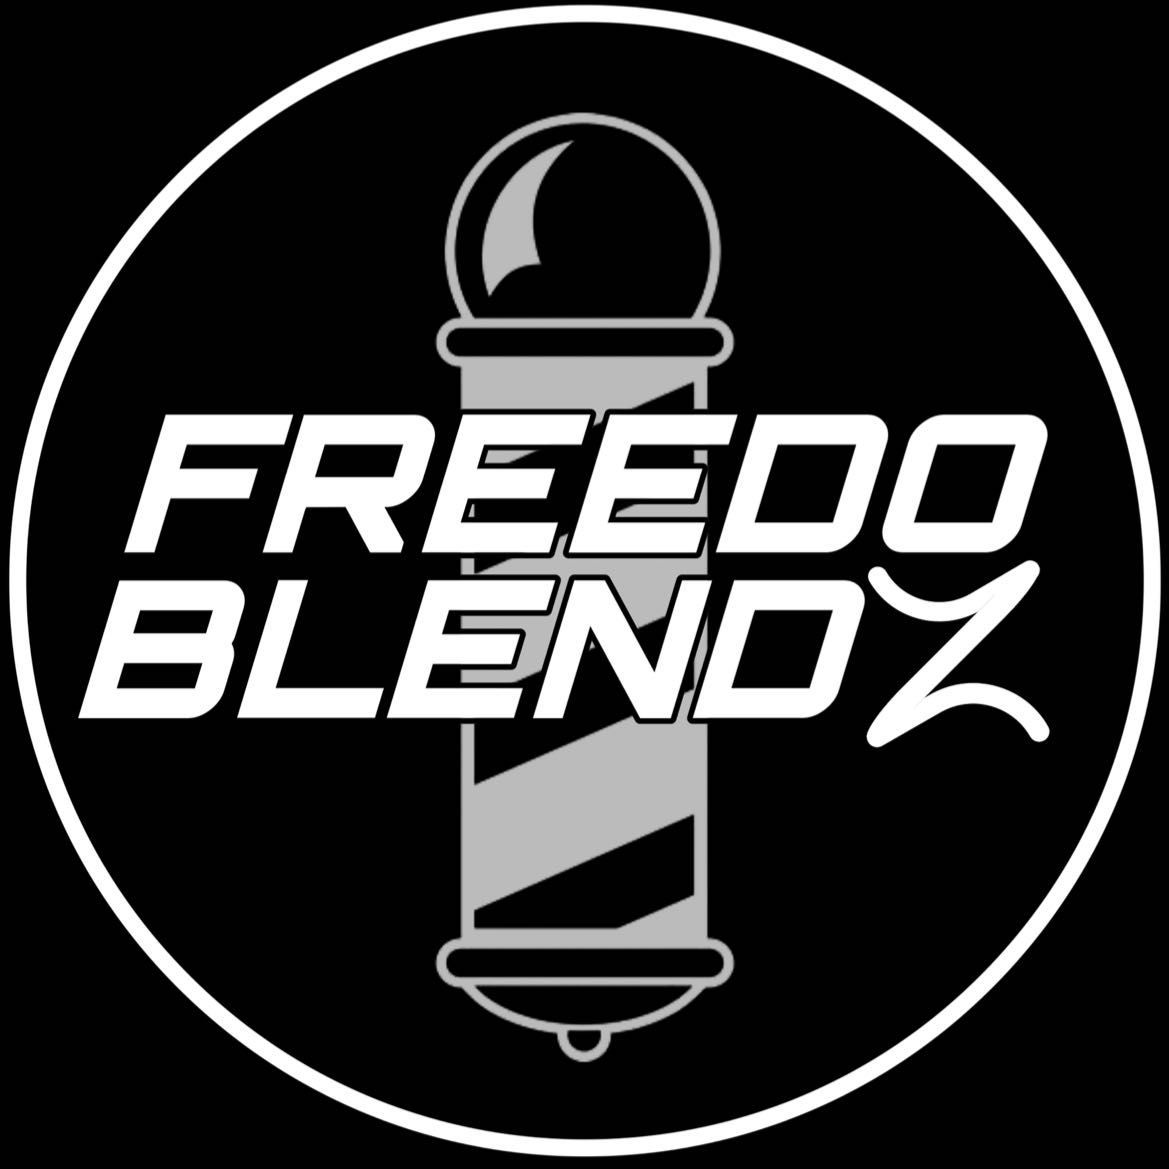 Freedo blendzz, Albuquerque, 87108